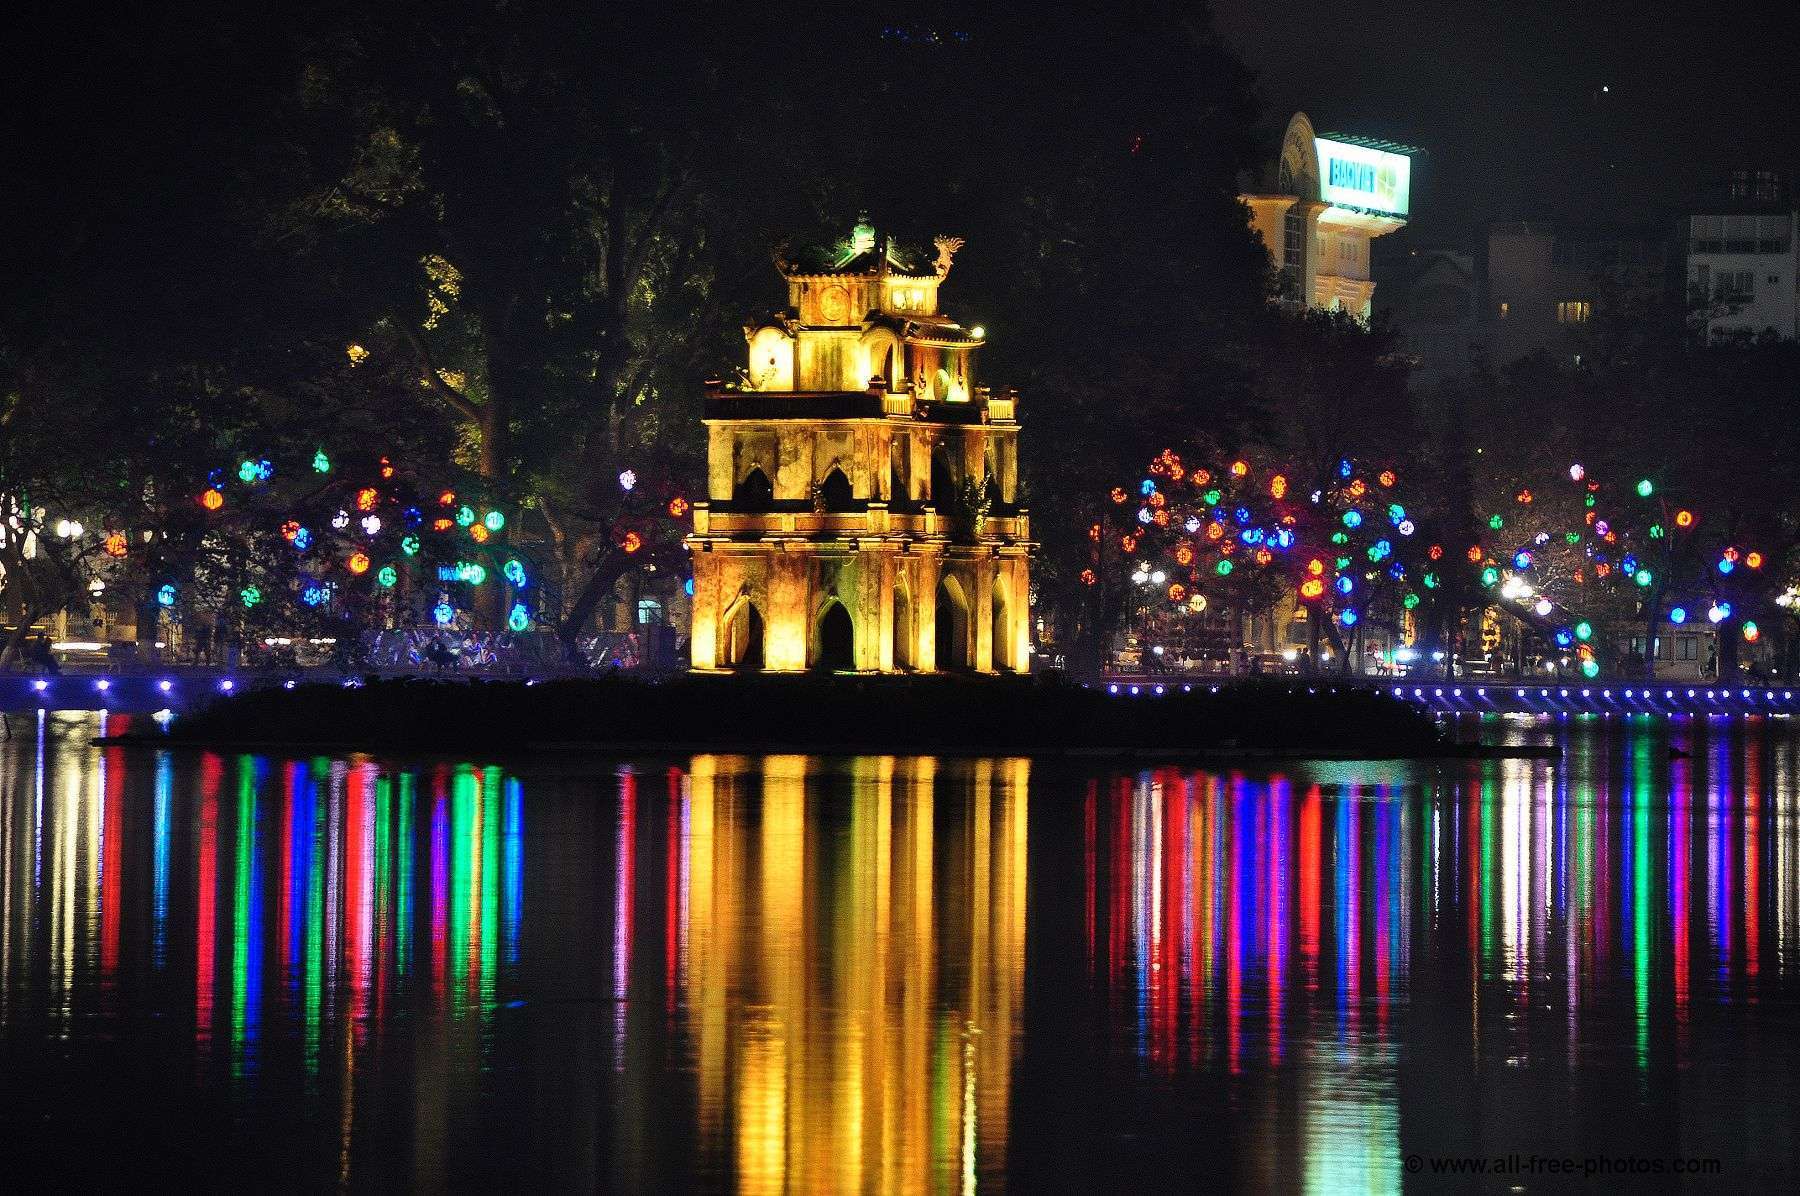 Get visa online Vietnam to travel to 10 most famous places (part 2)